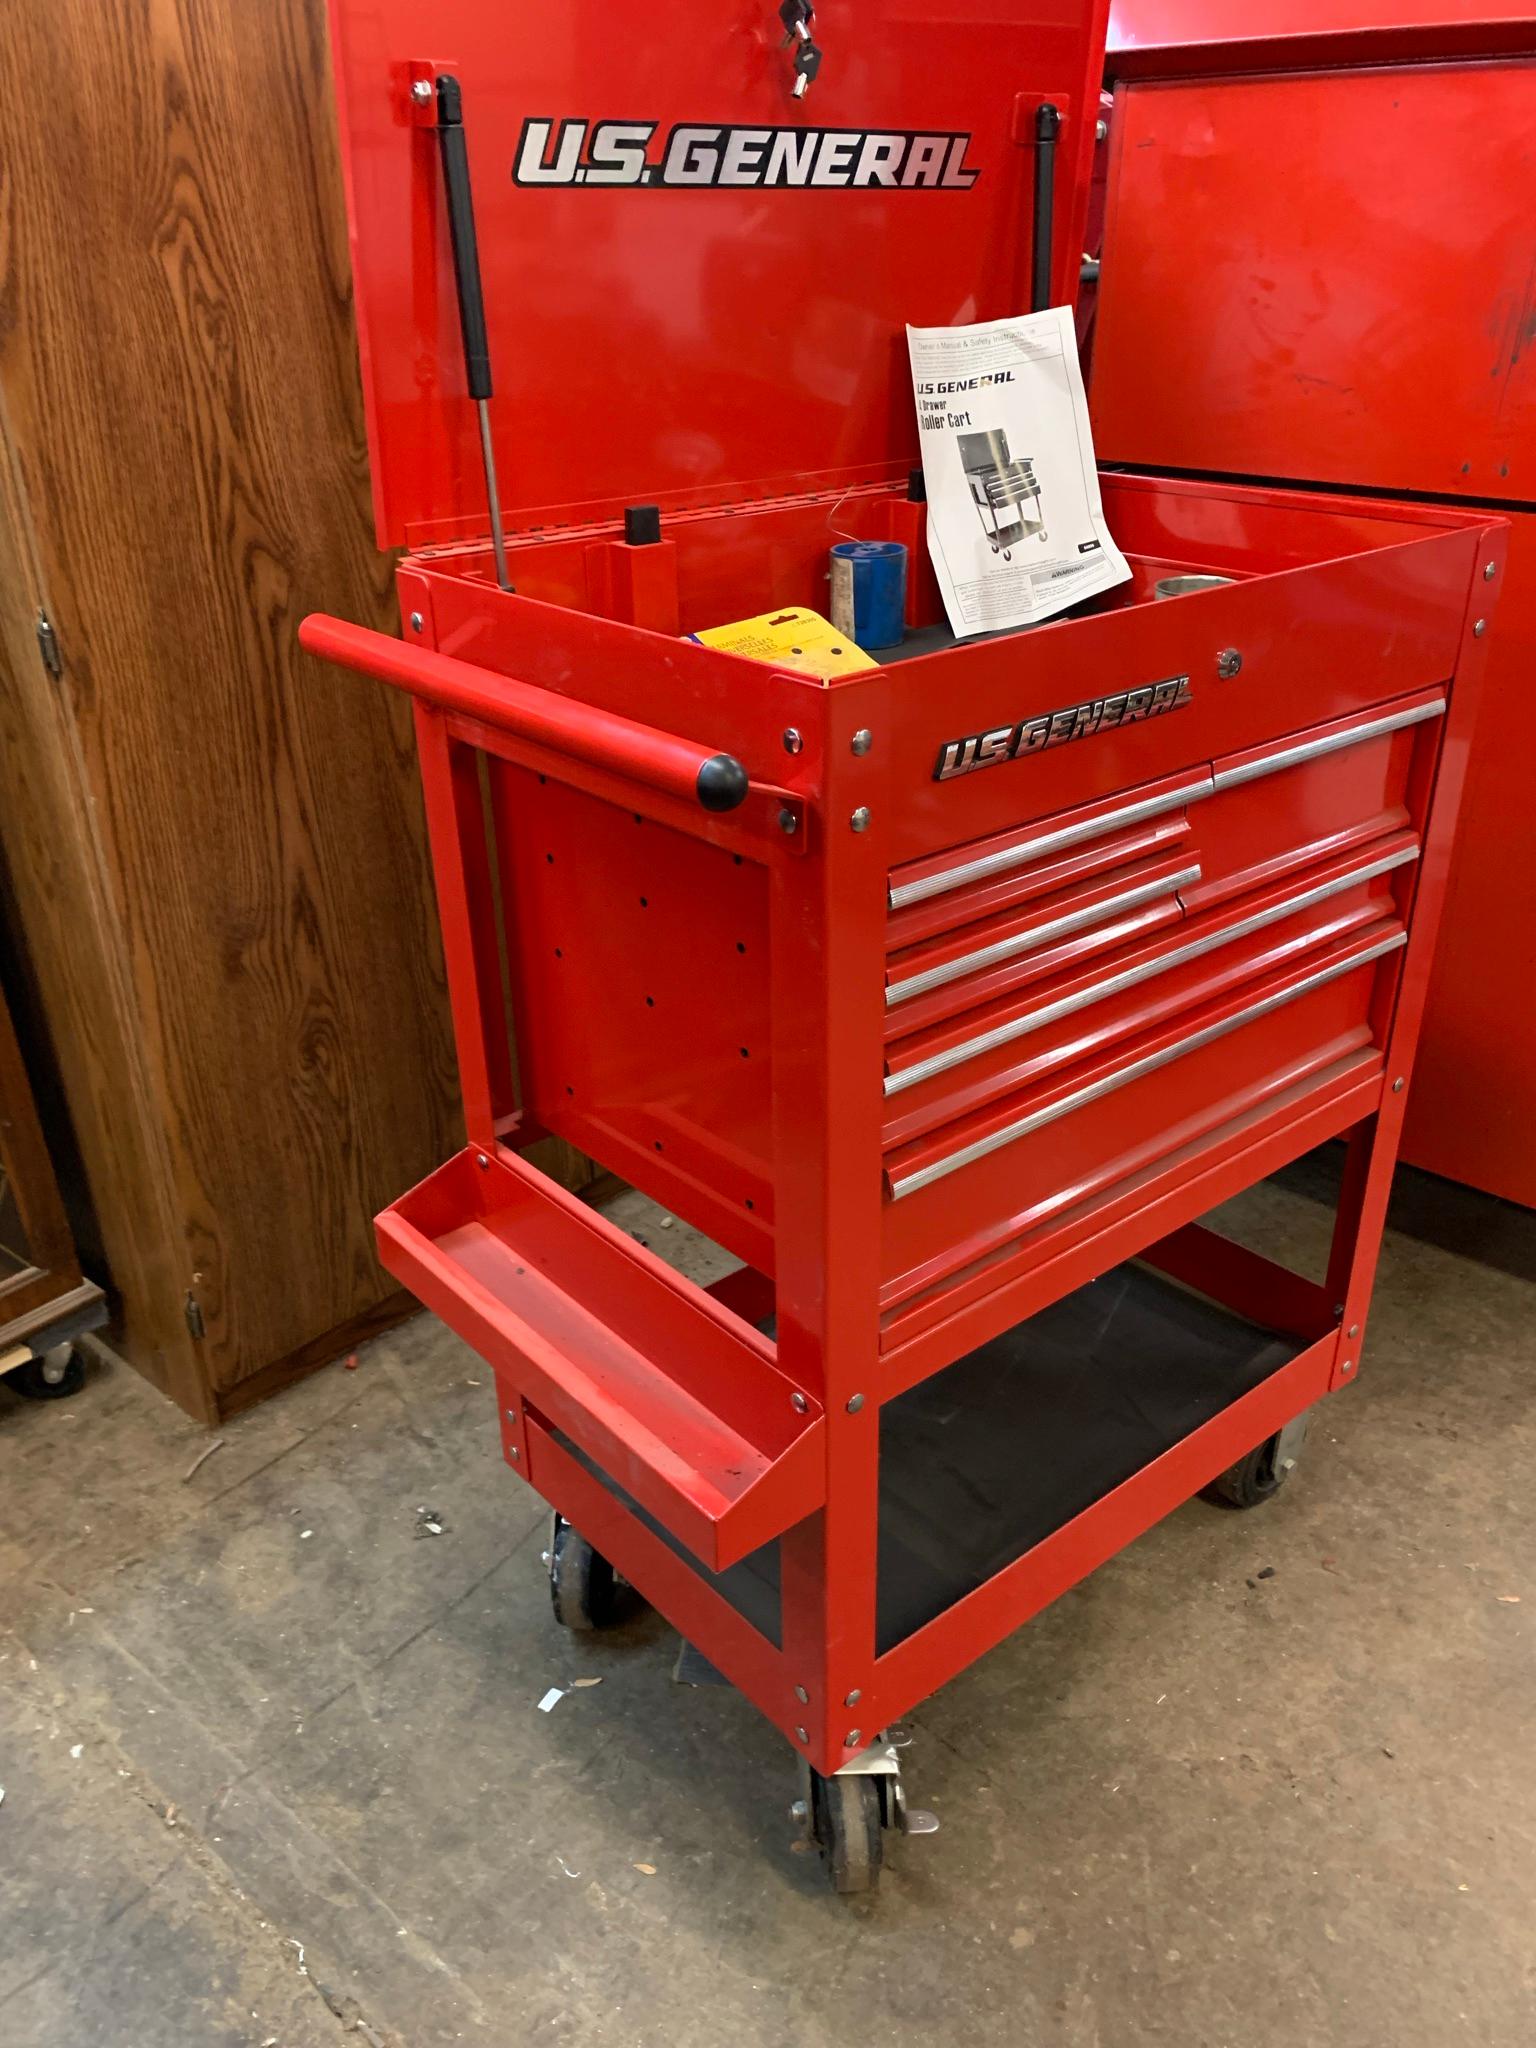 U.S. General 5 Drawer Roller Tool Box Cart with Keys